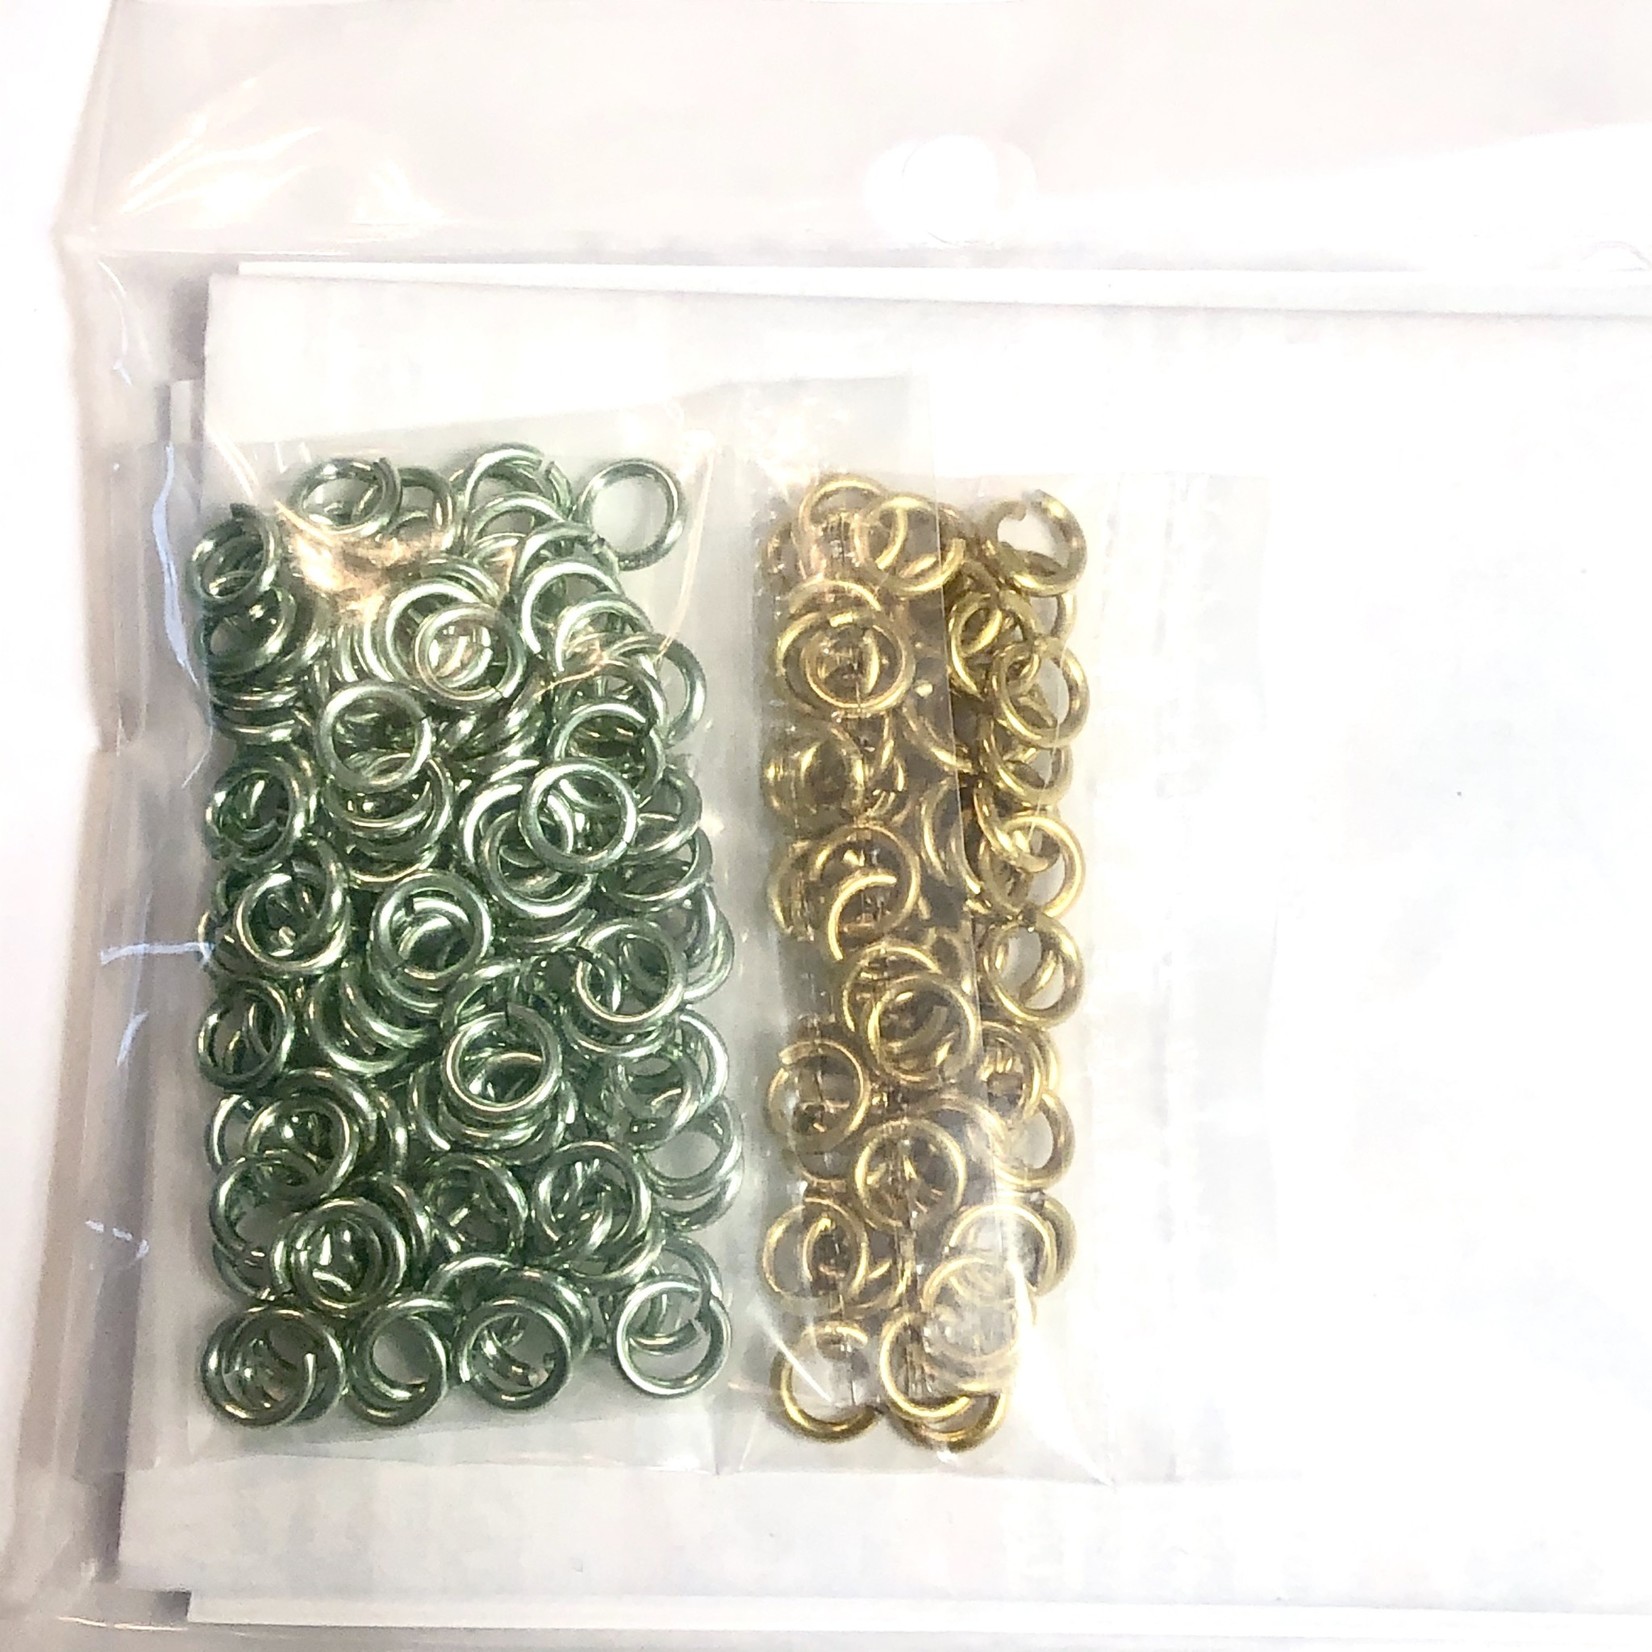 Hyperlinks Chain Maille Two-Tone Byzantine Bracelet Kit Gold & Seafoam